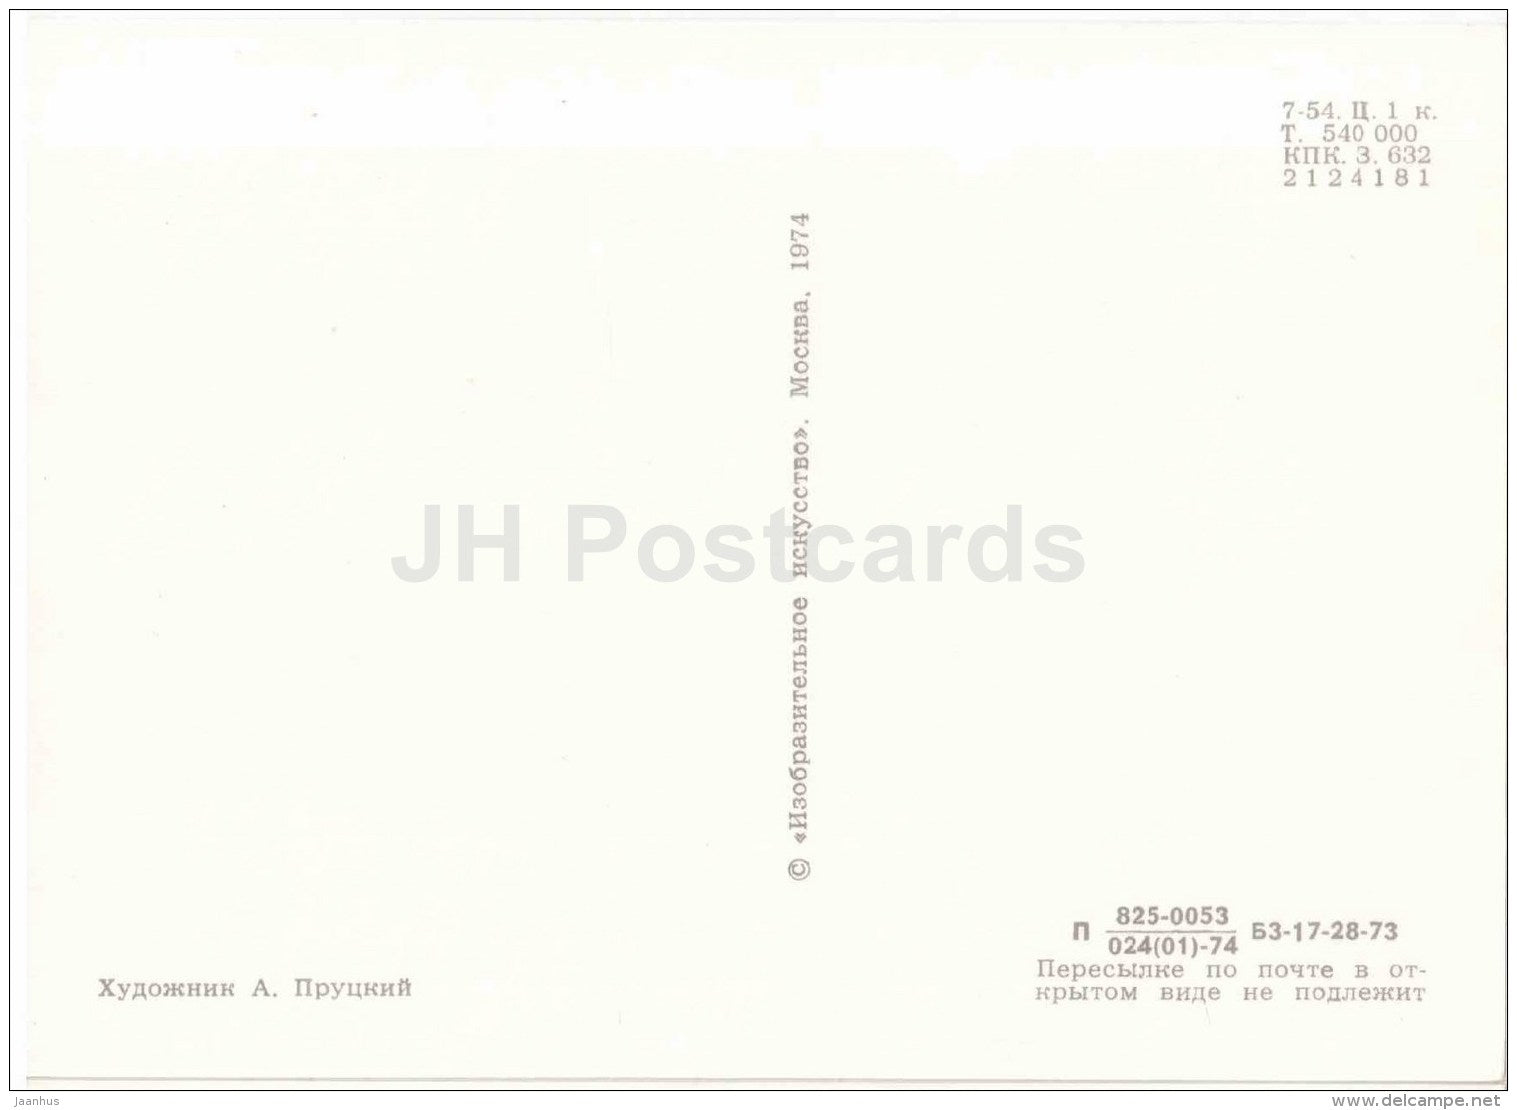 Alexander Radischev - Portraits of Russian Writers - 1974 - Russia USSR - unused - JH Postcards